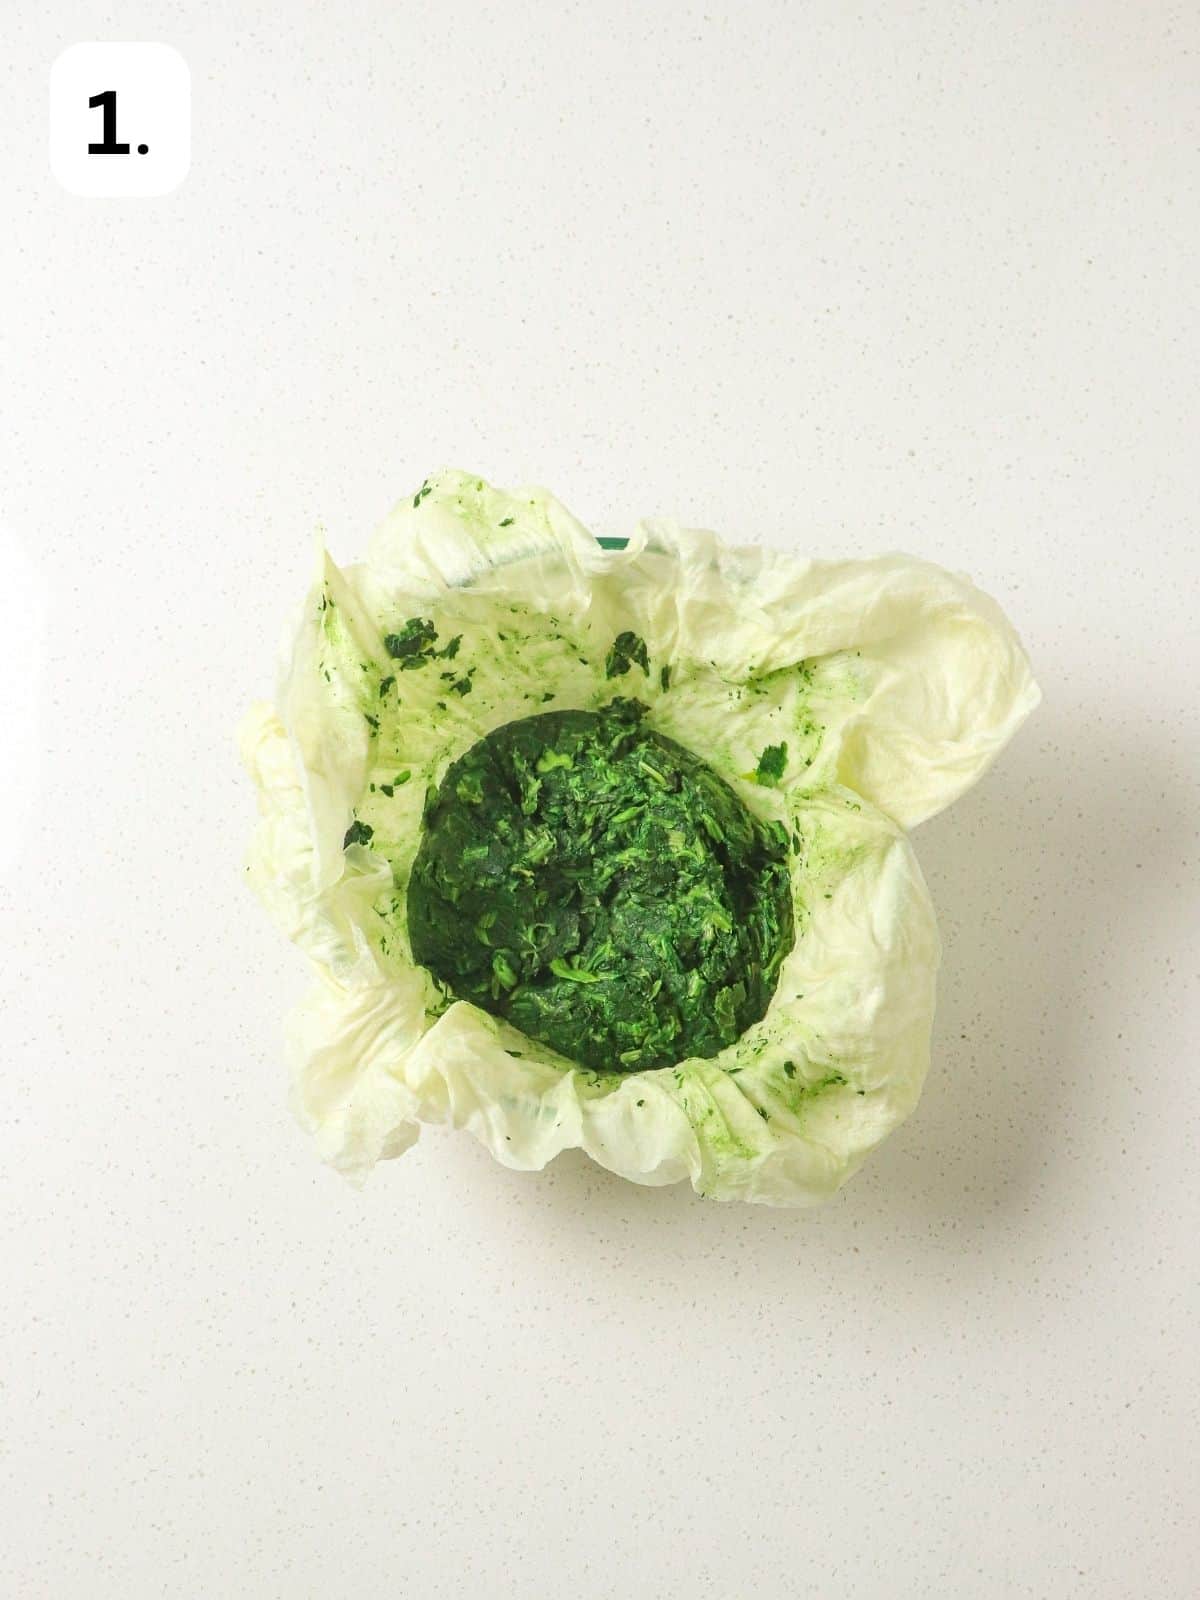 Green frozen vegetable in napkin